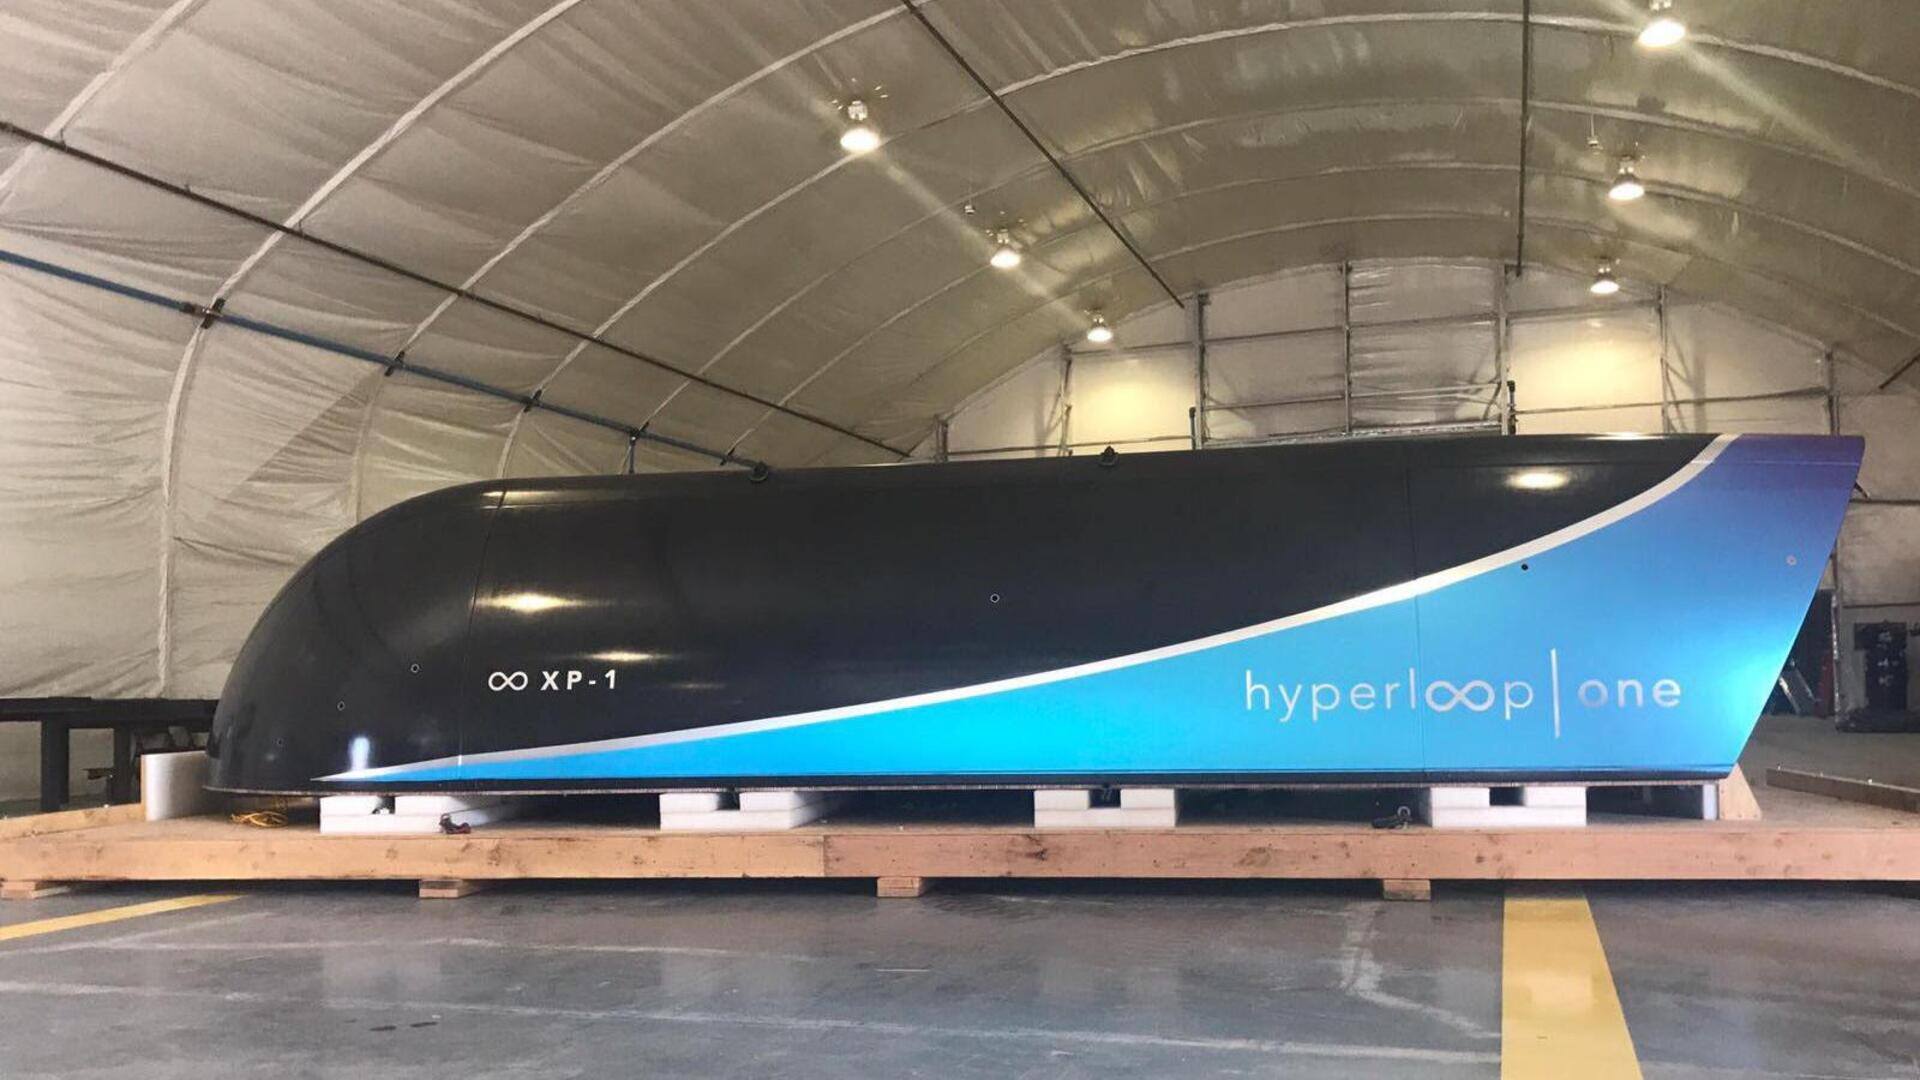 Richard Branson-backed Hyperloop One is shutting down